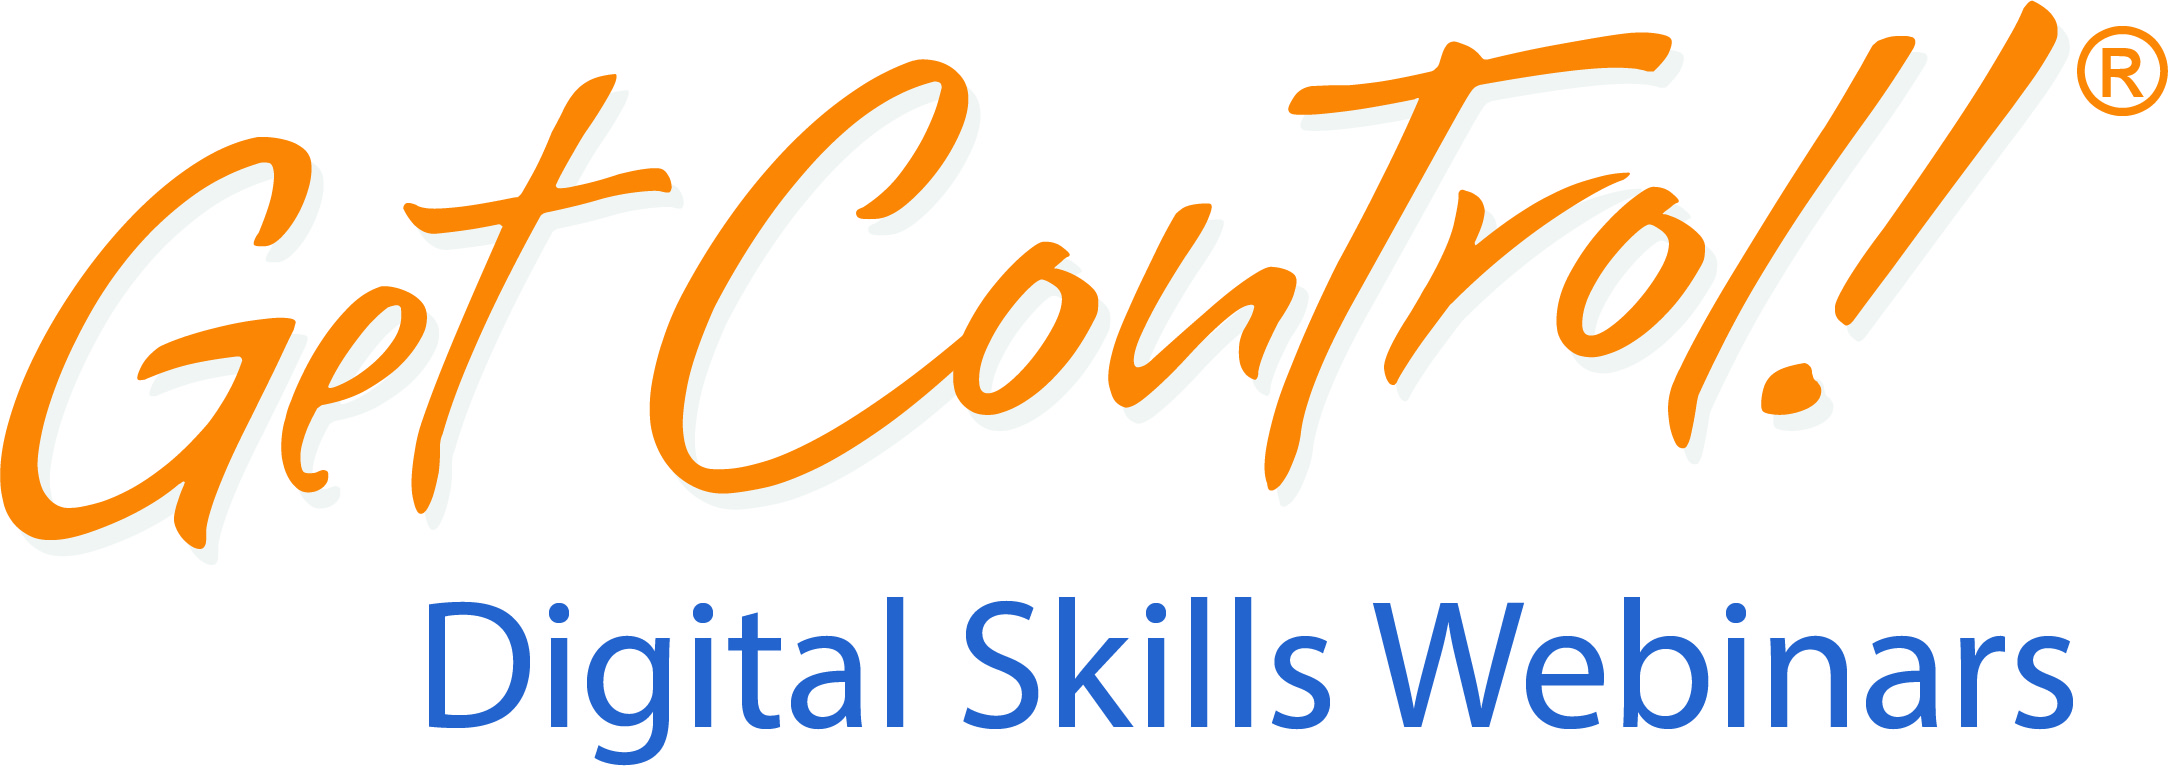 Get Control Digital Skills Webinars